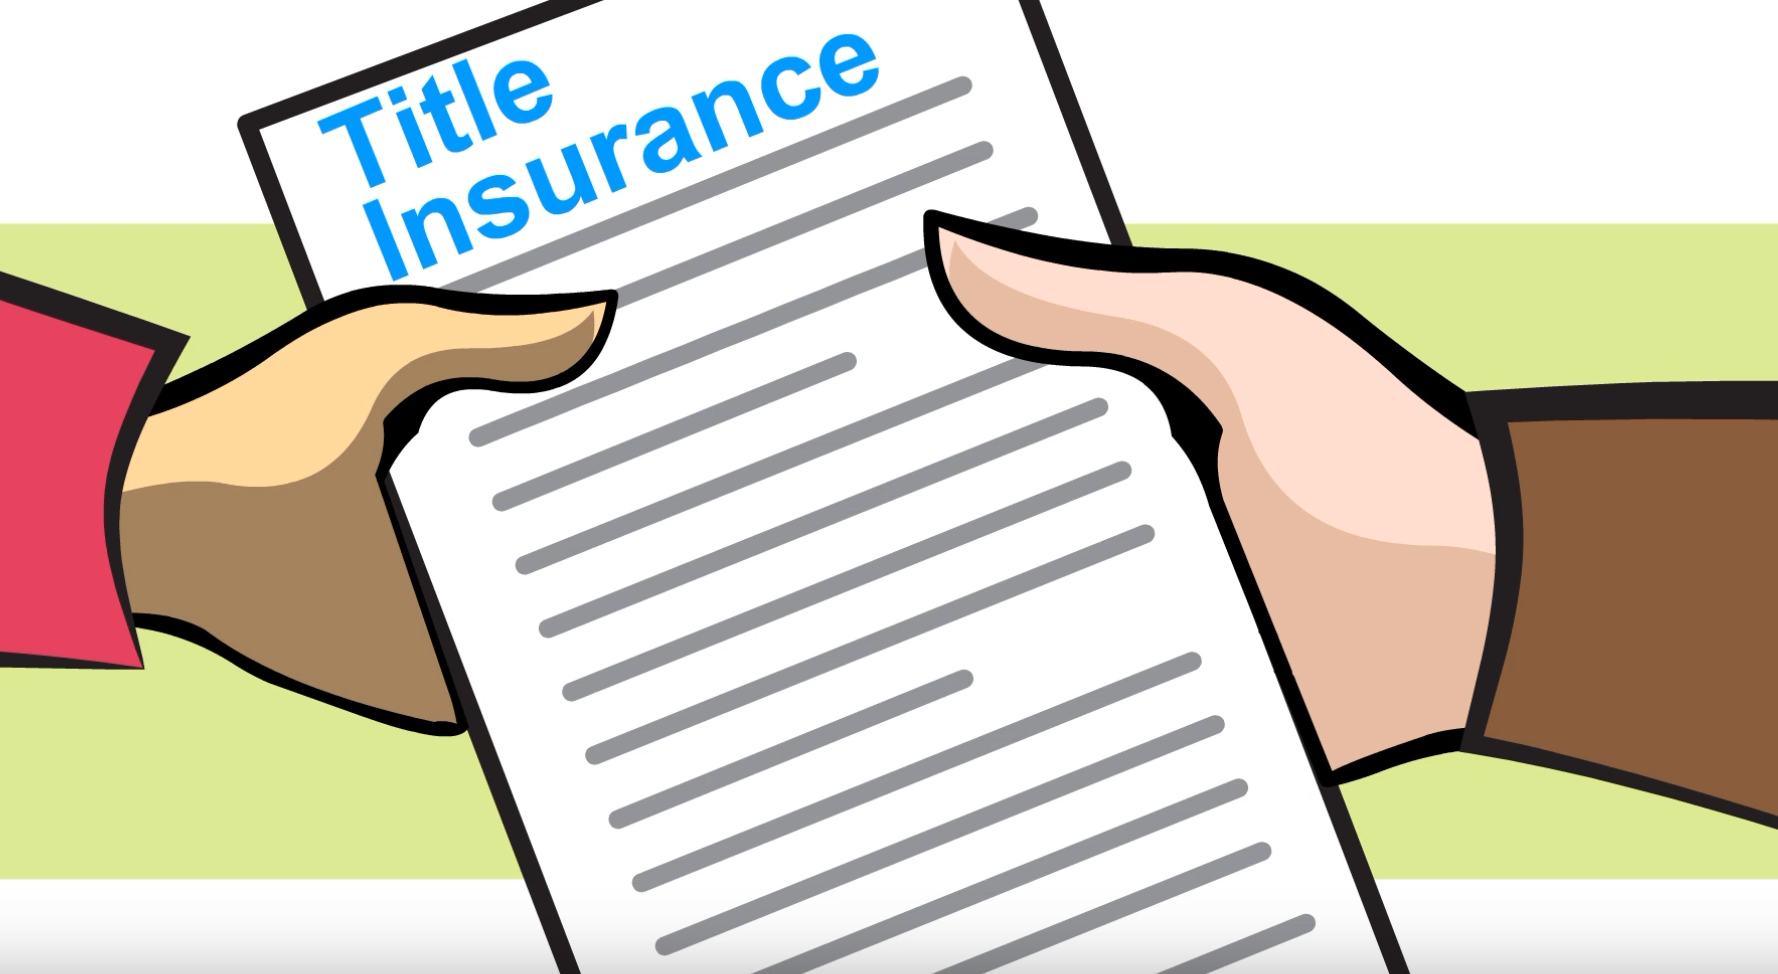 Title insurance